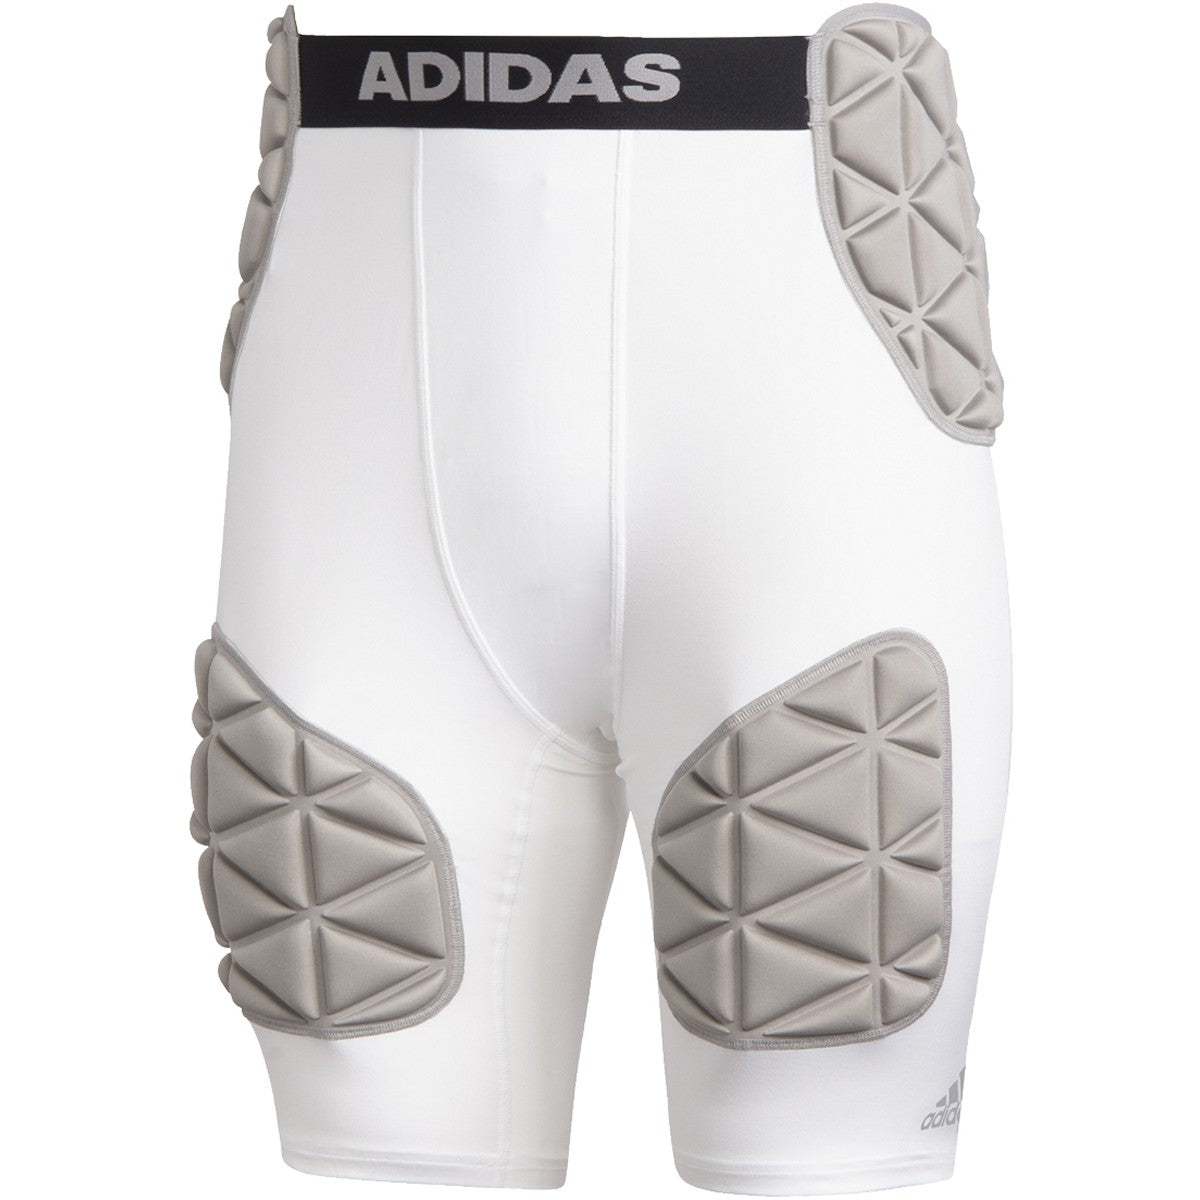 Adidas Smash Pad Girdle – Kratz Sporting Goods